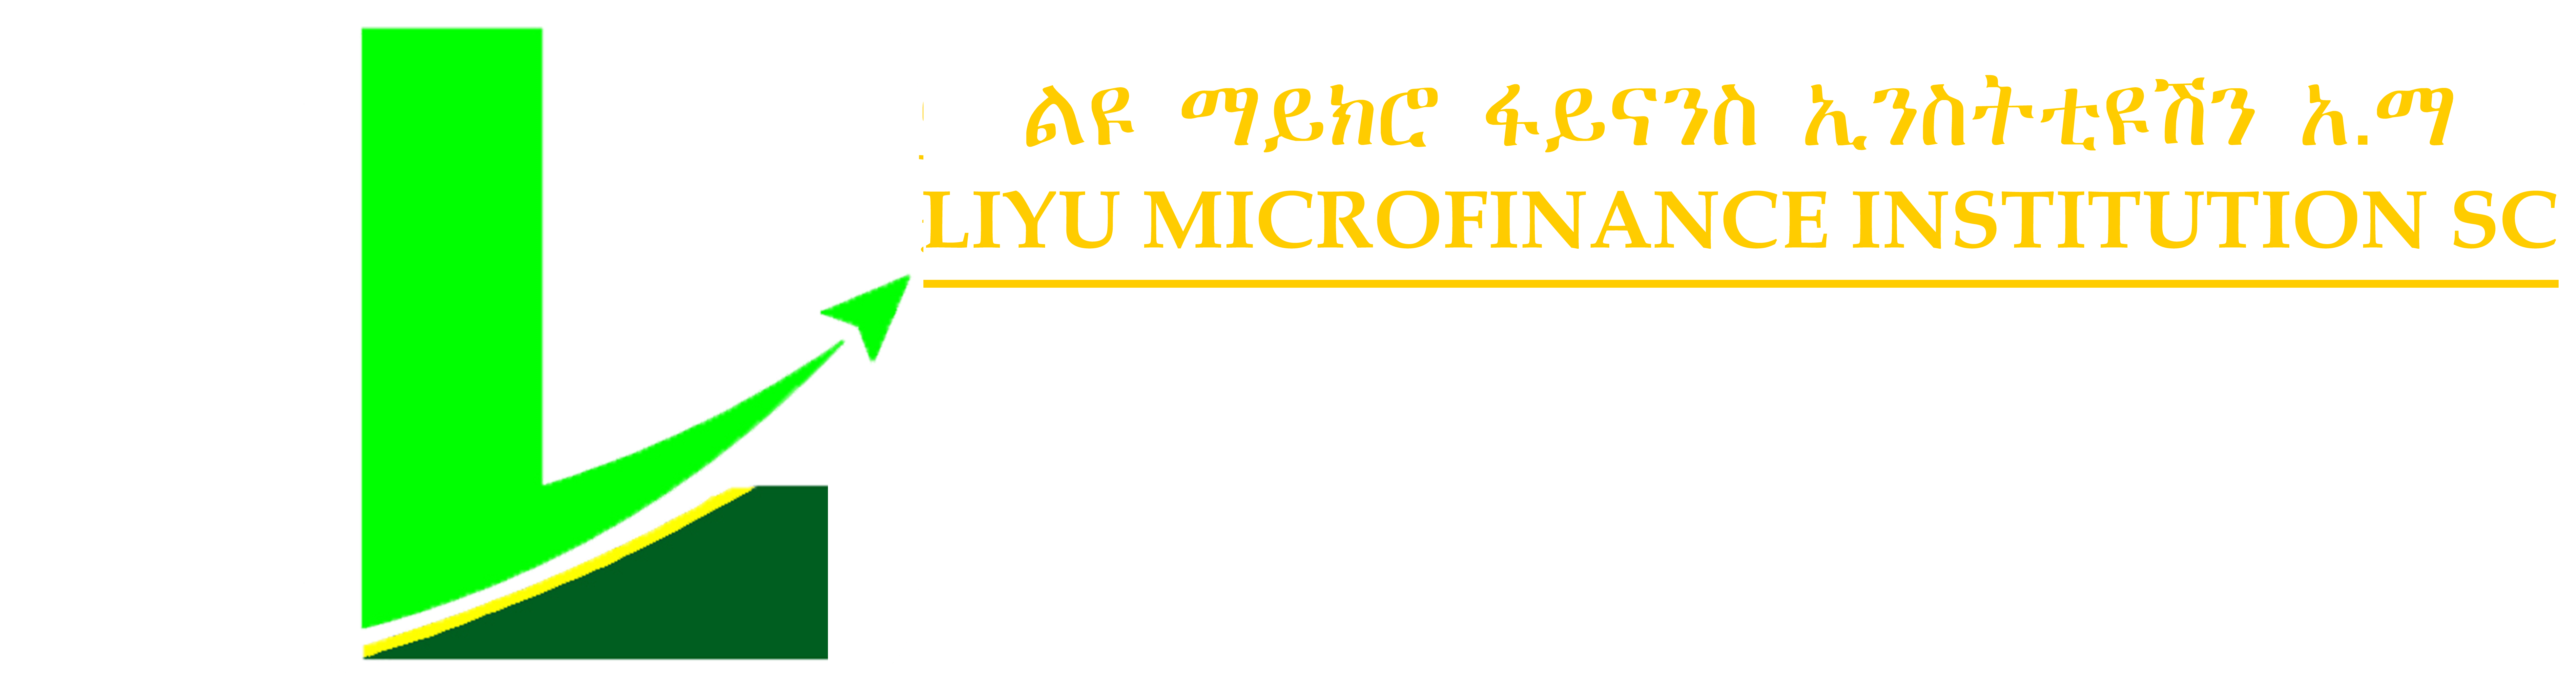 Liyu Microfinance Institution S.C